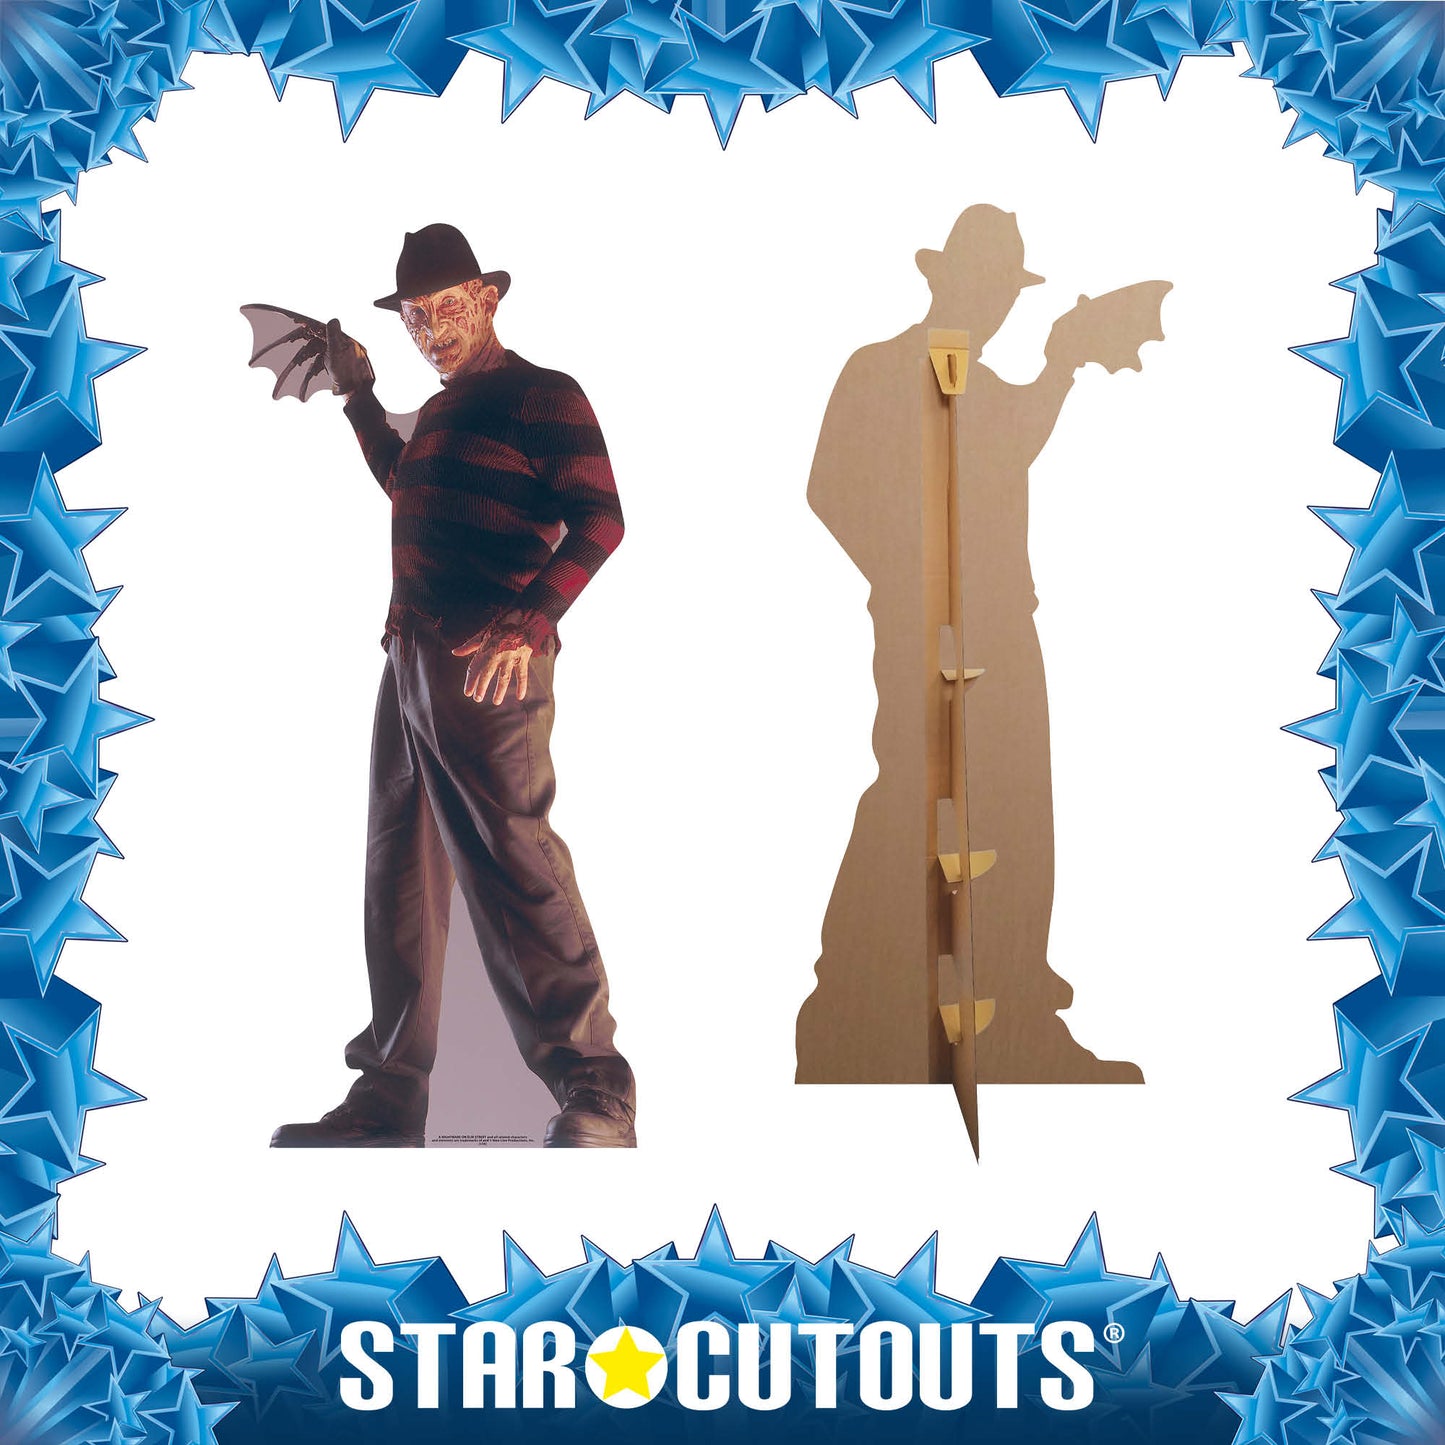 Freddy Krueger Nightmare on Elm Street Cardboard Cutout Lifesize